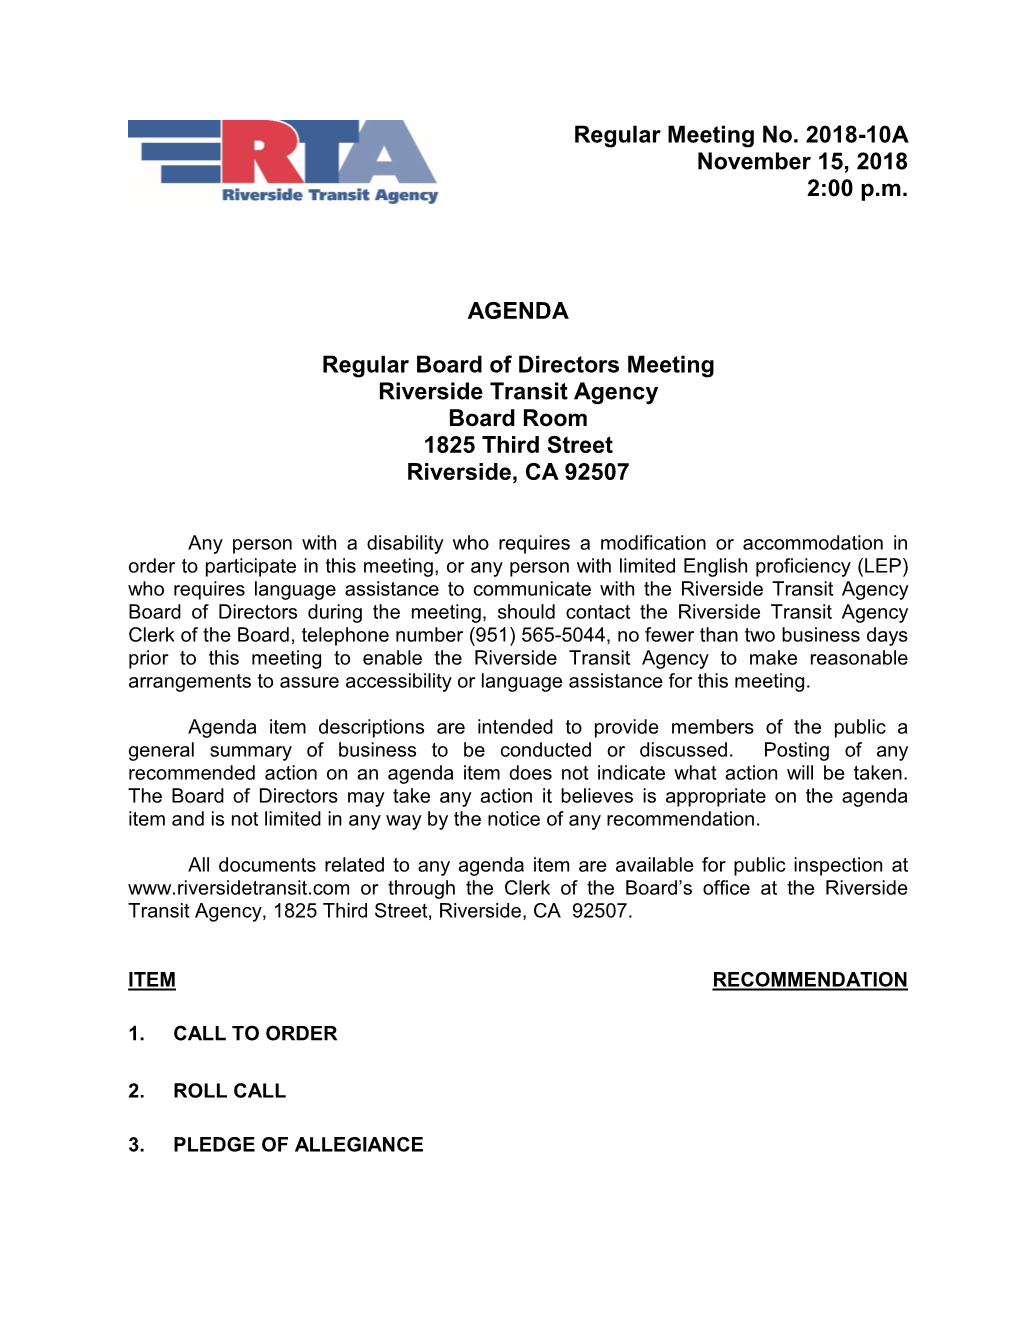 Regular Meeting No. 2018-10A November 15, 2018 2:00 P.M. AGENDA Regular Board of Directors Meeting Riverside Transit Agency Boar